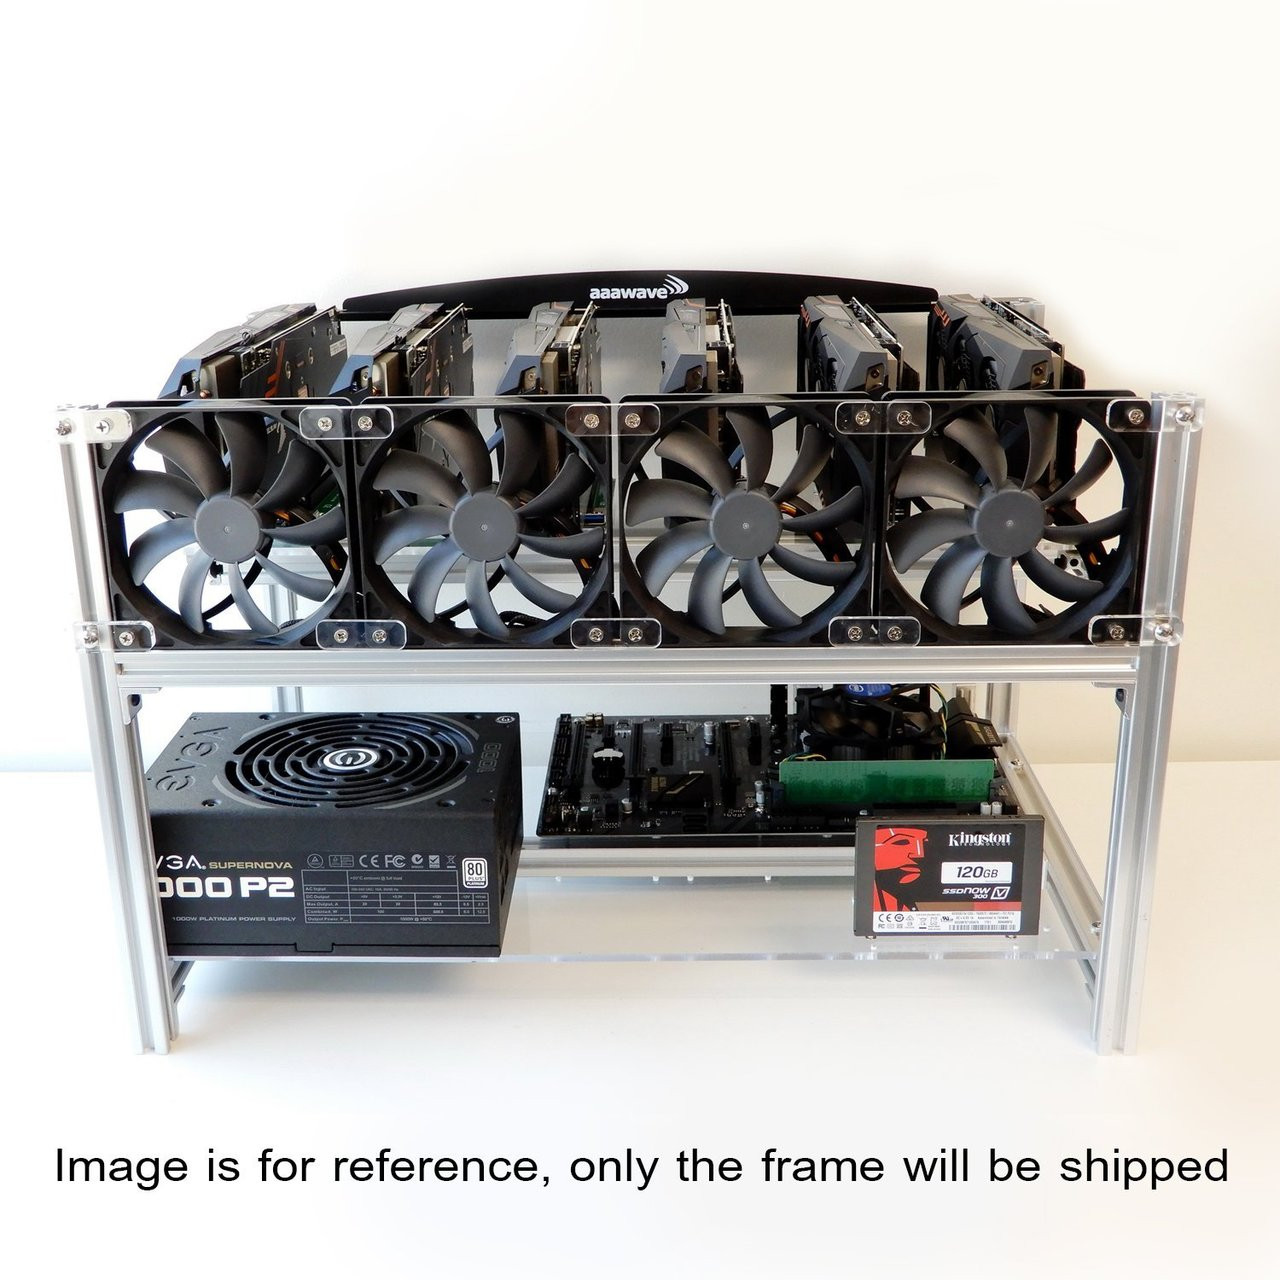 AAAwave 'THE DREDGE' 6 GPU Mining Case + 4x AAAwave 2100 rpm fan + 6 x PCI Riser